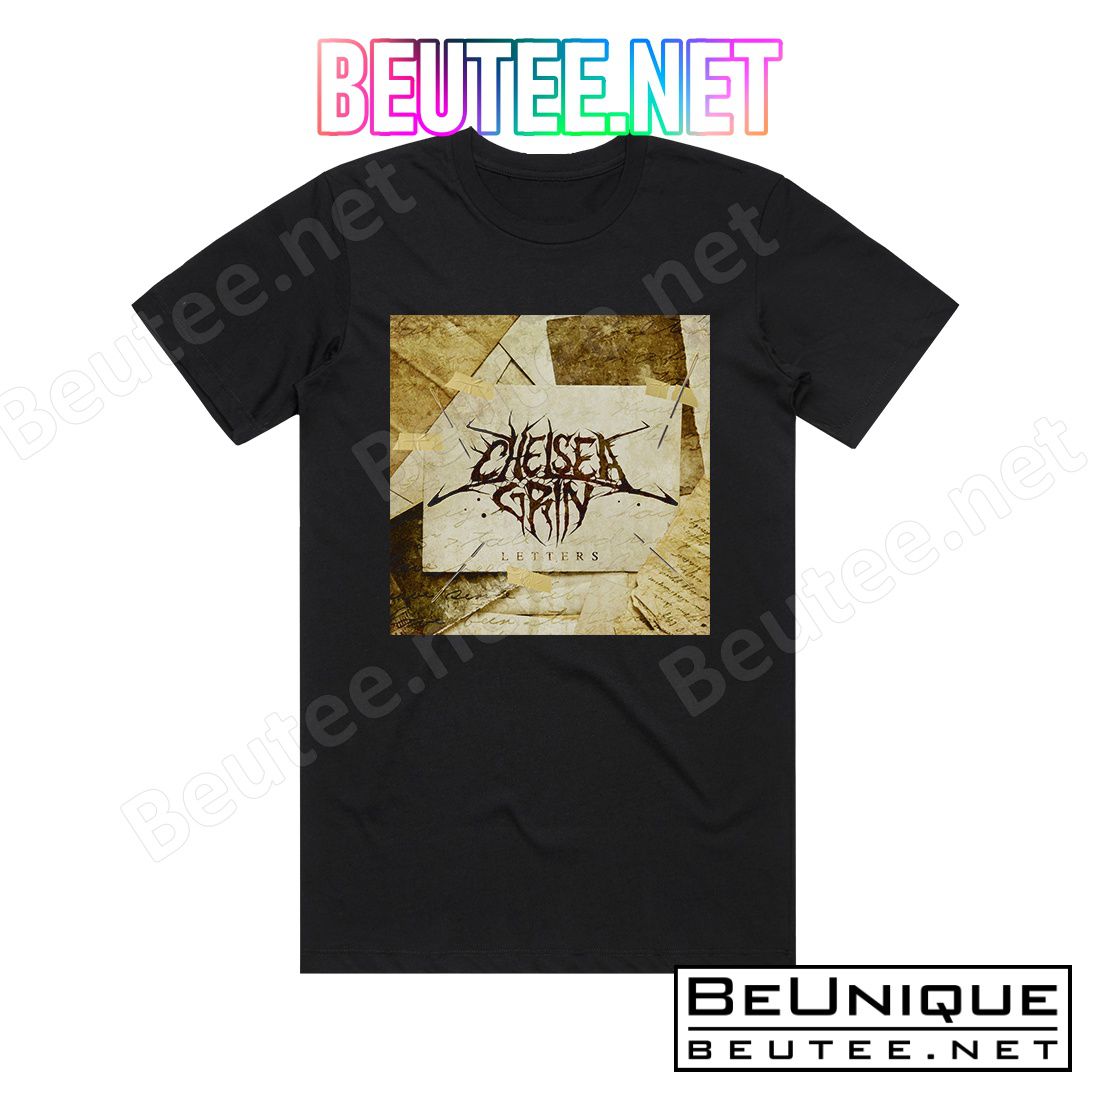 Chelsea Grin Letters Album Cover T-Shirt